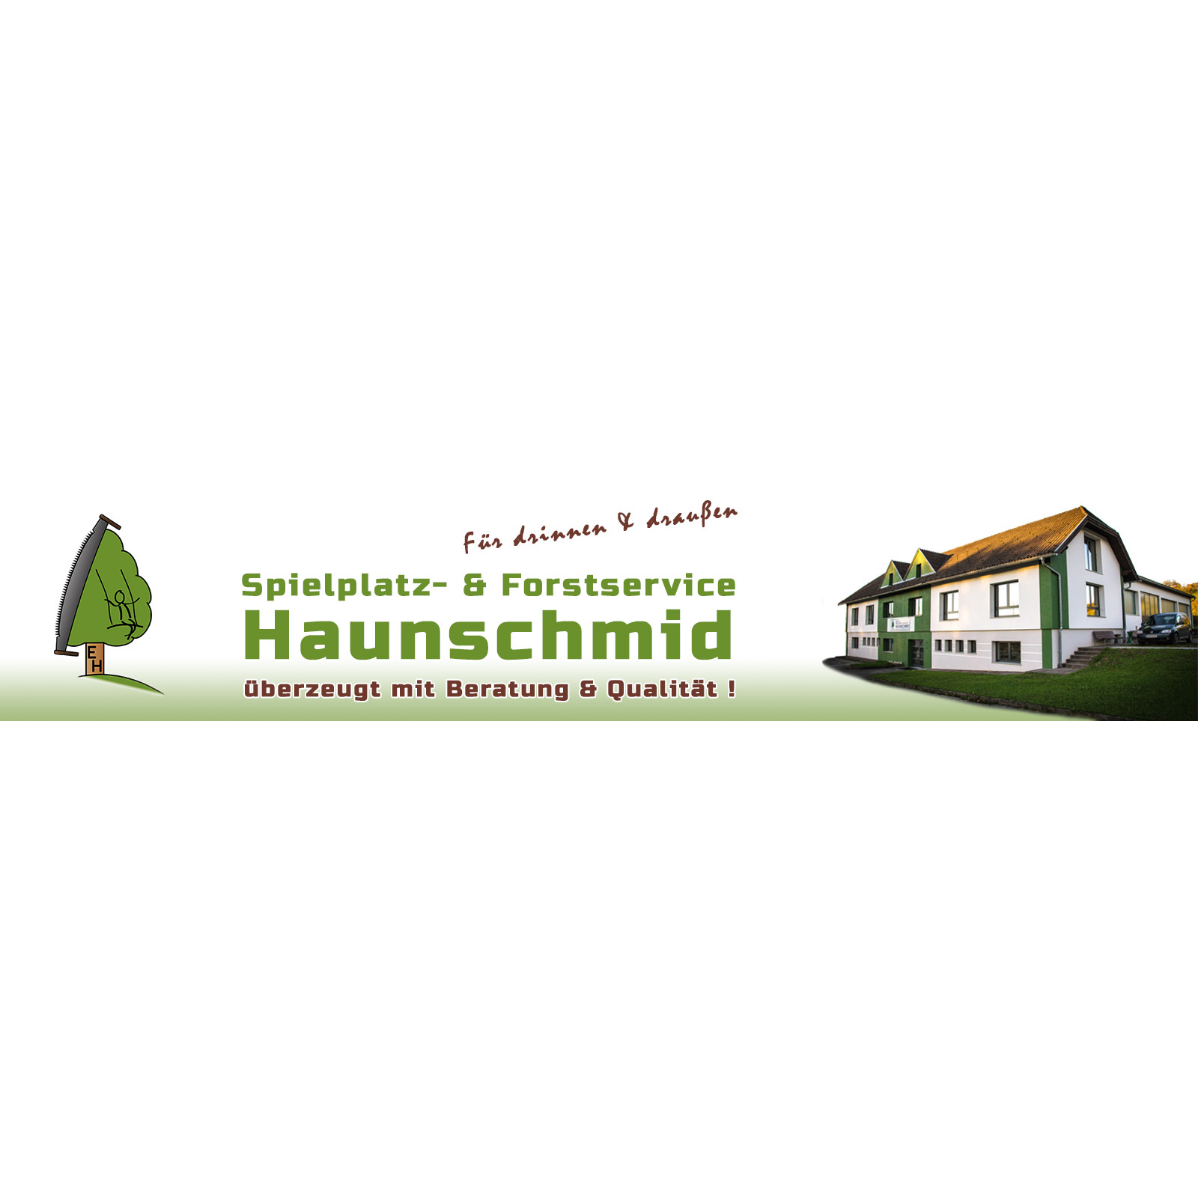 Spielplatz- & Forstservice Haunschmid Logo